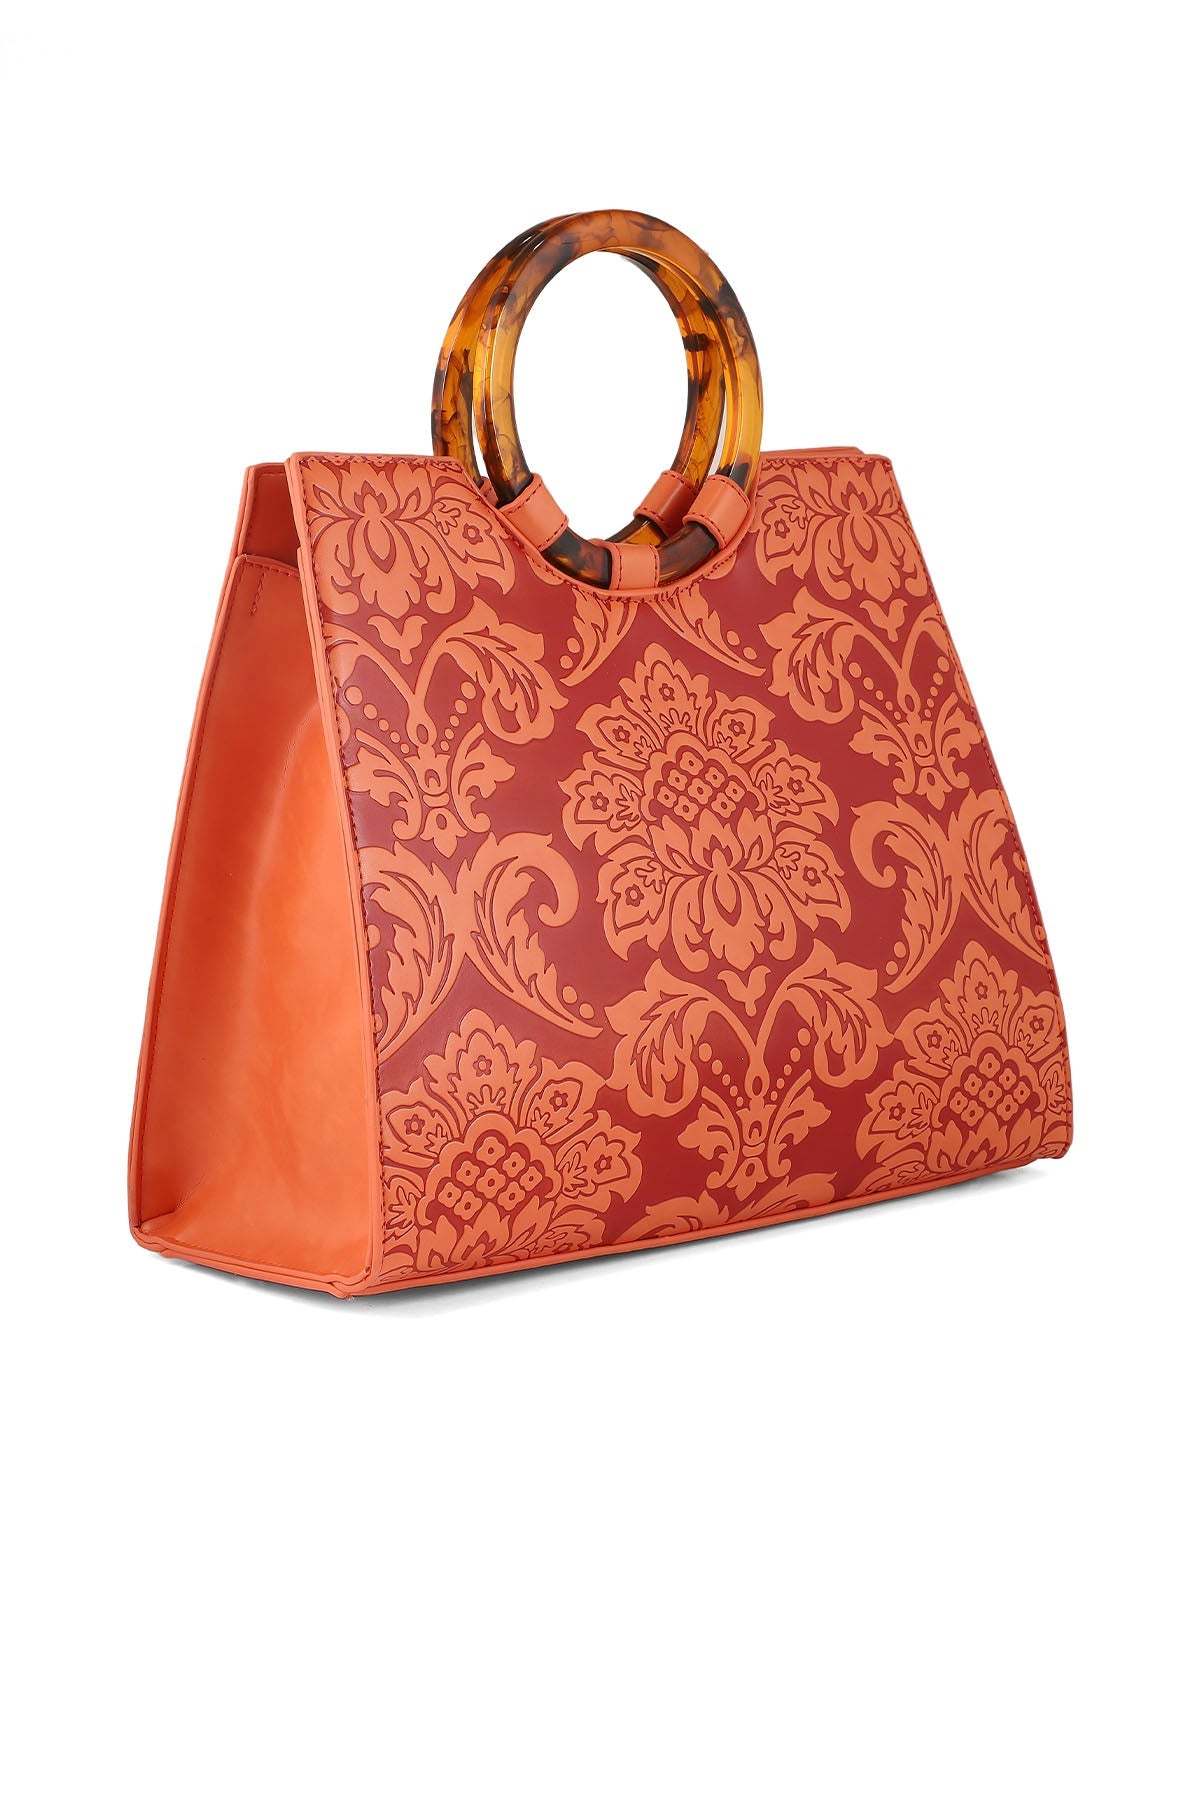 Top Handle Hand Bags B14997-Orange